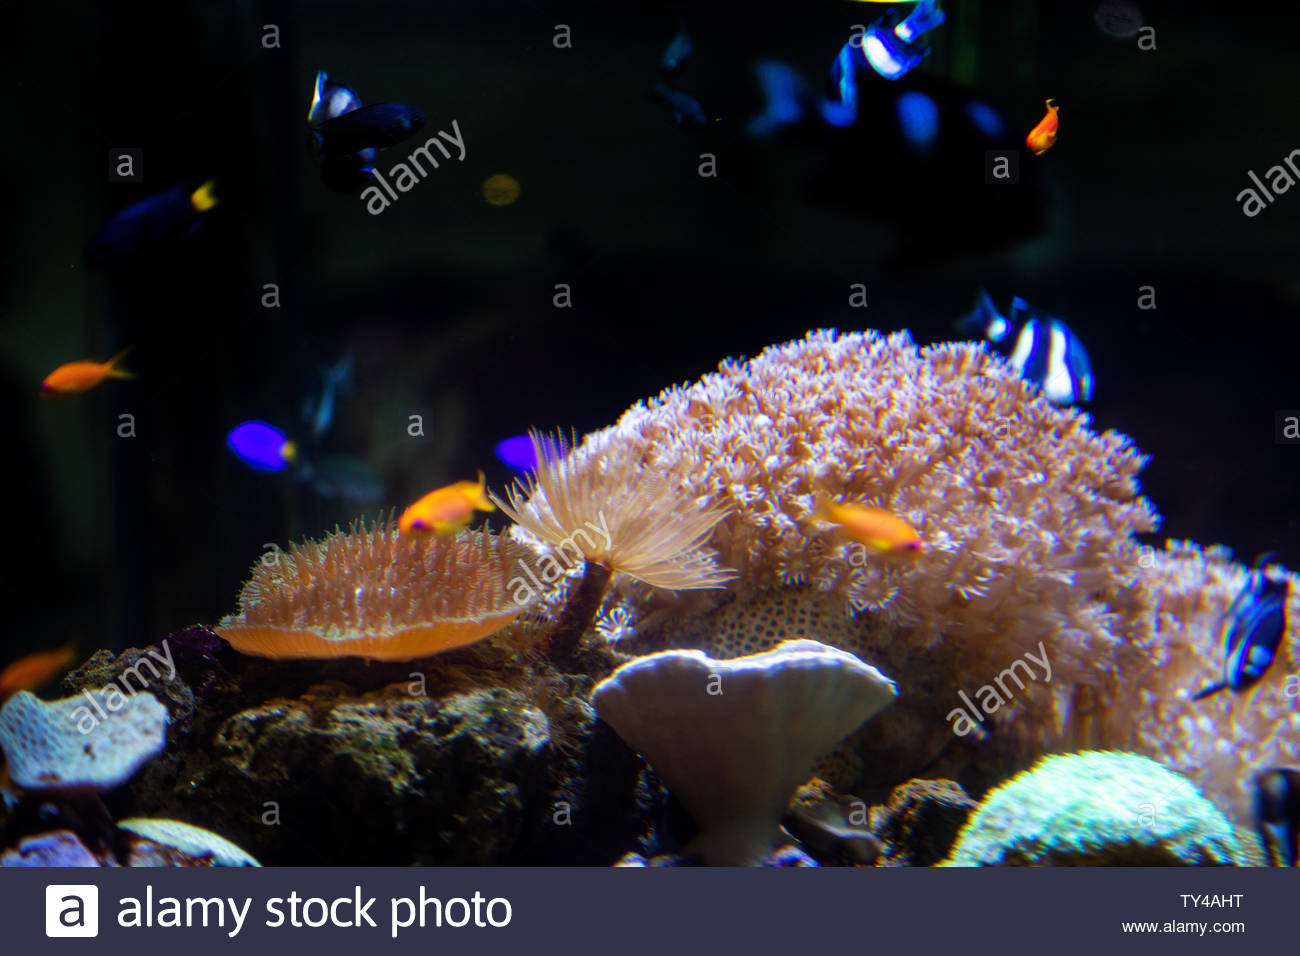 Water Tree In Aquarium With Fish Dark Background Stock Photo